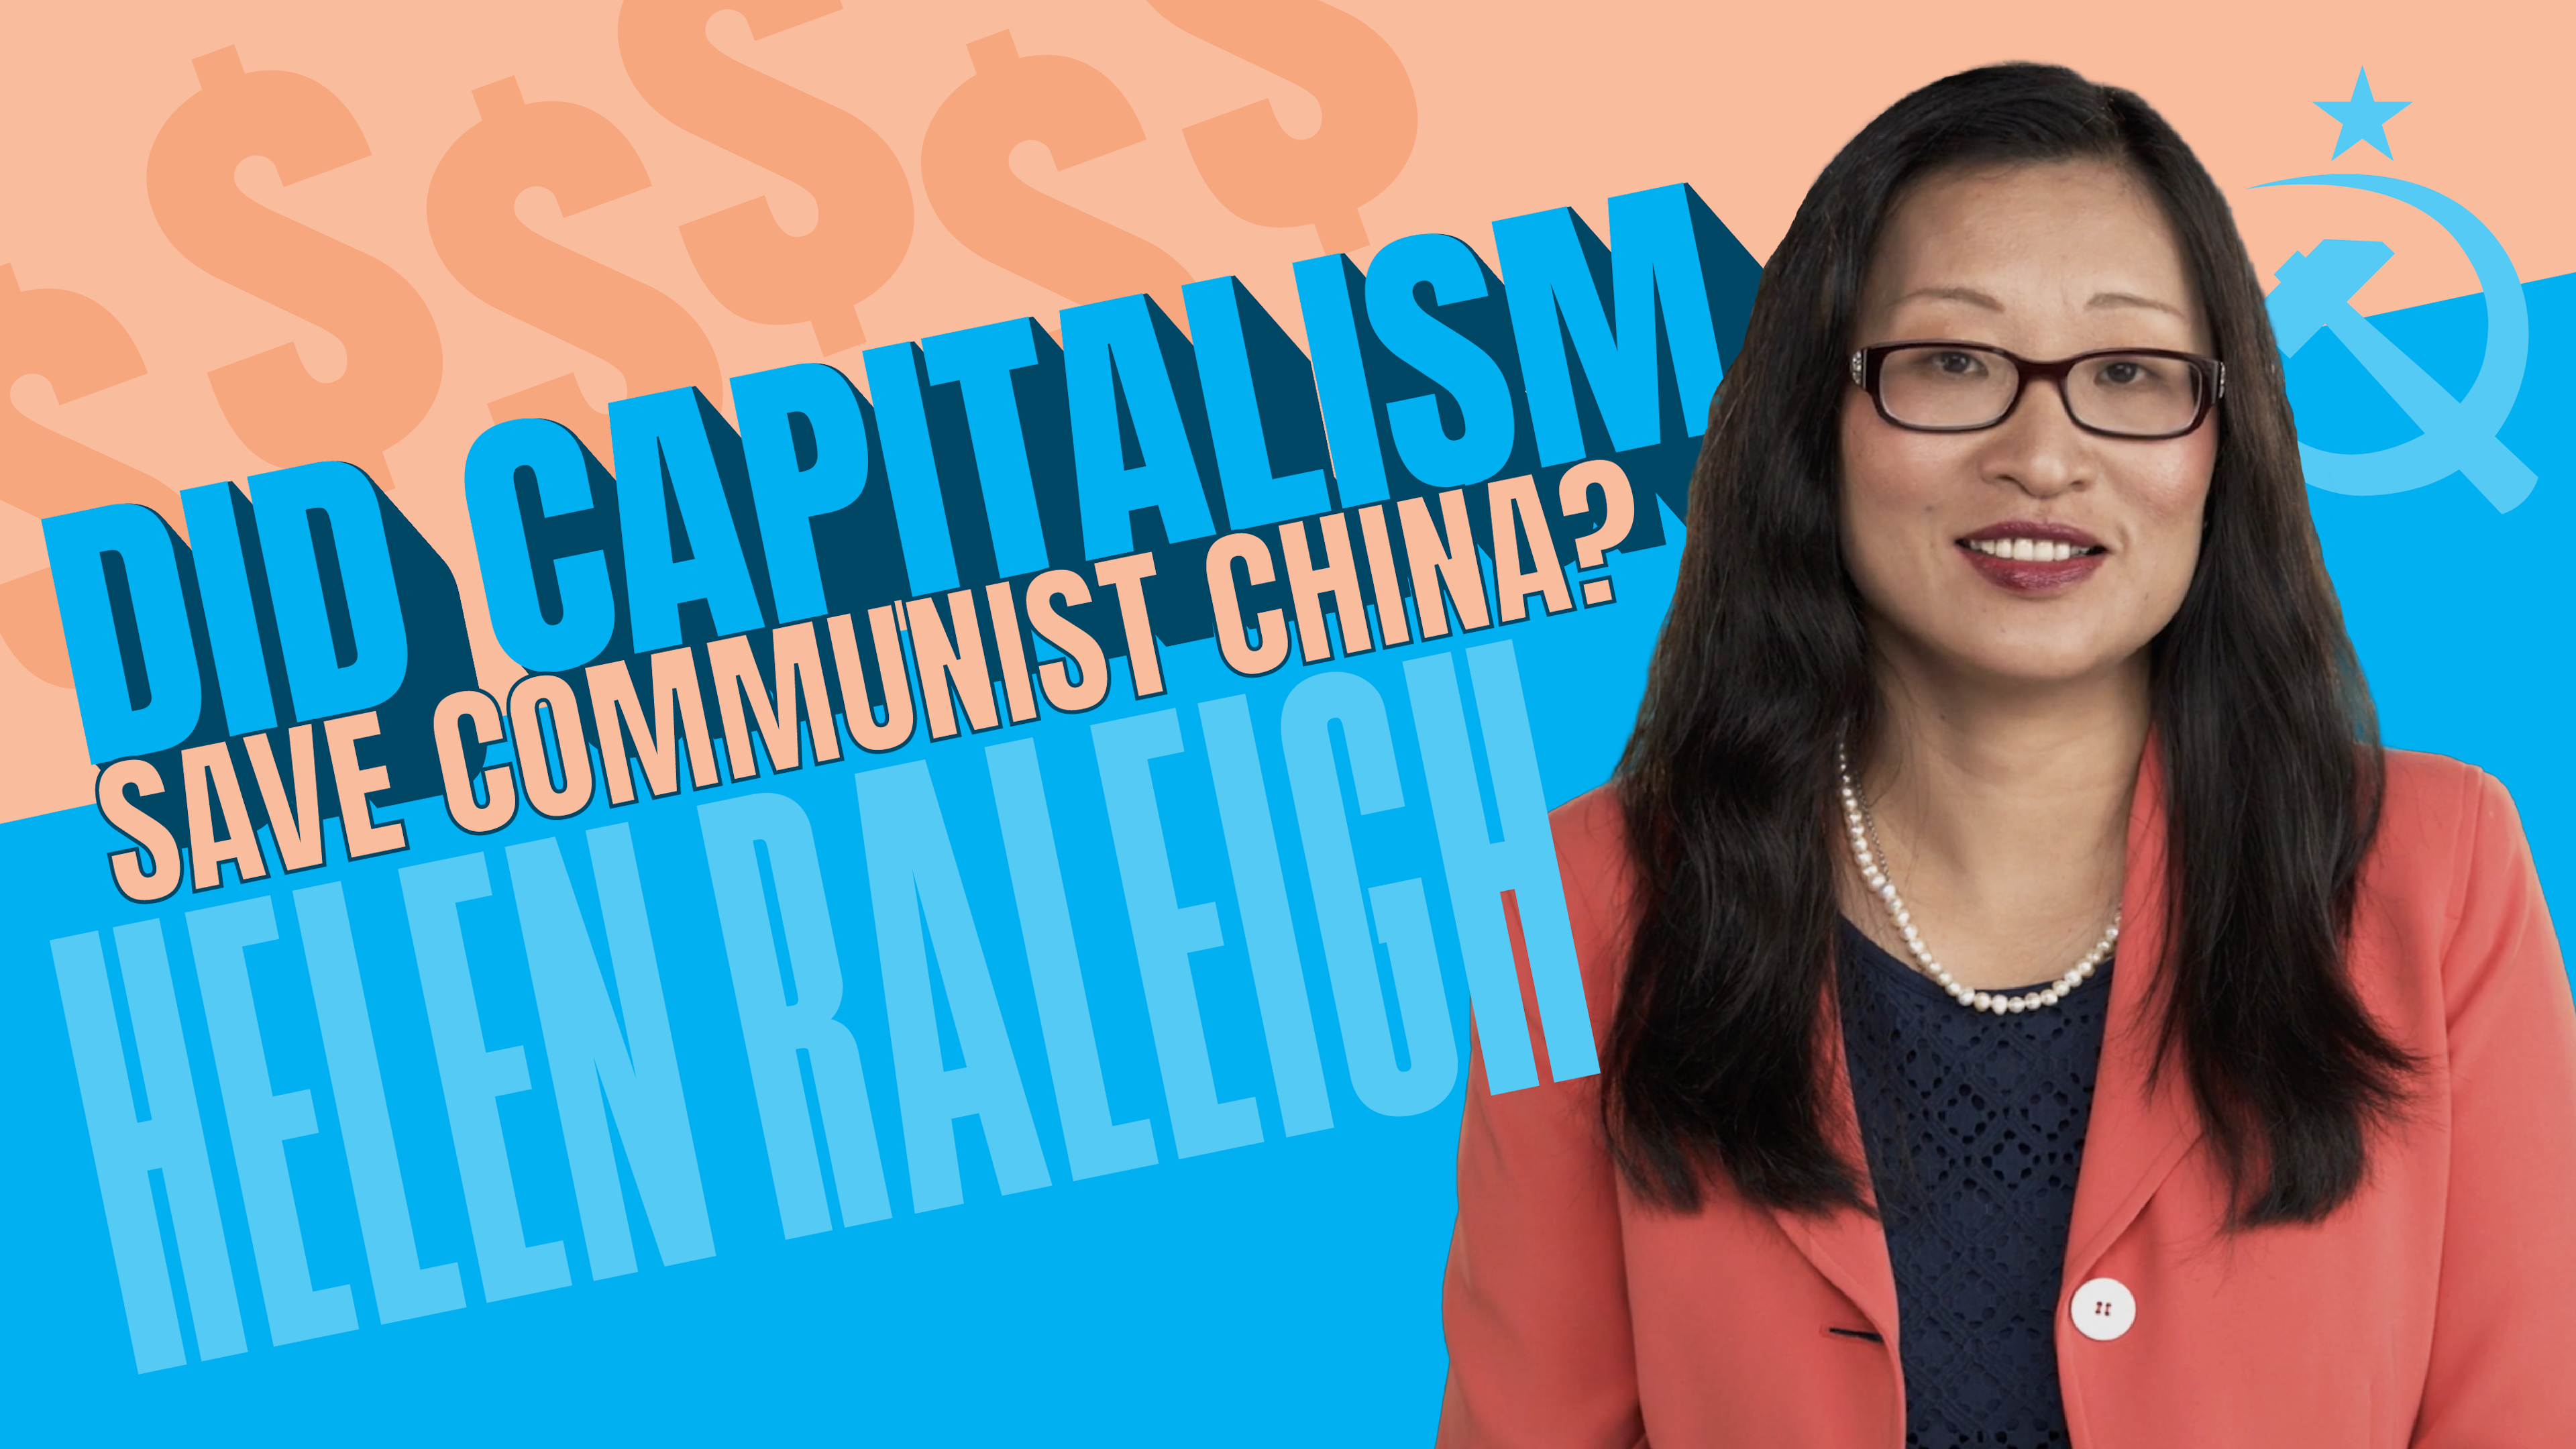 Did Capitalism Save Communist China?